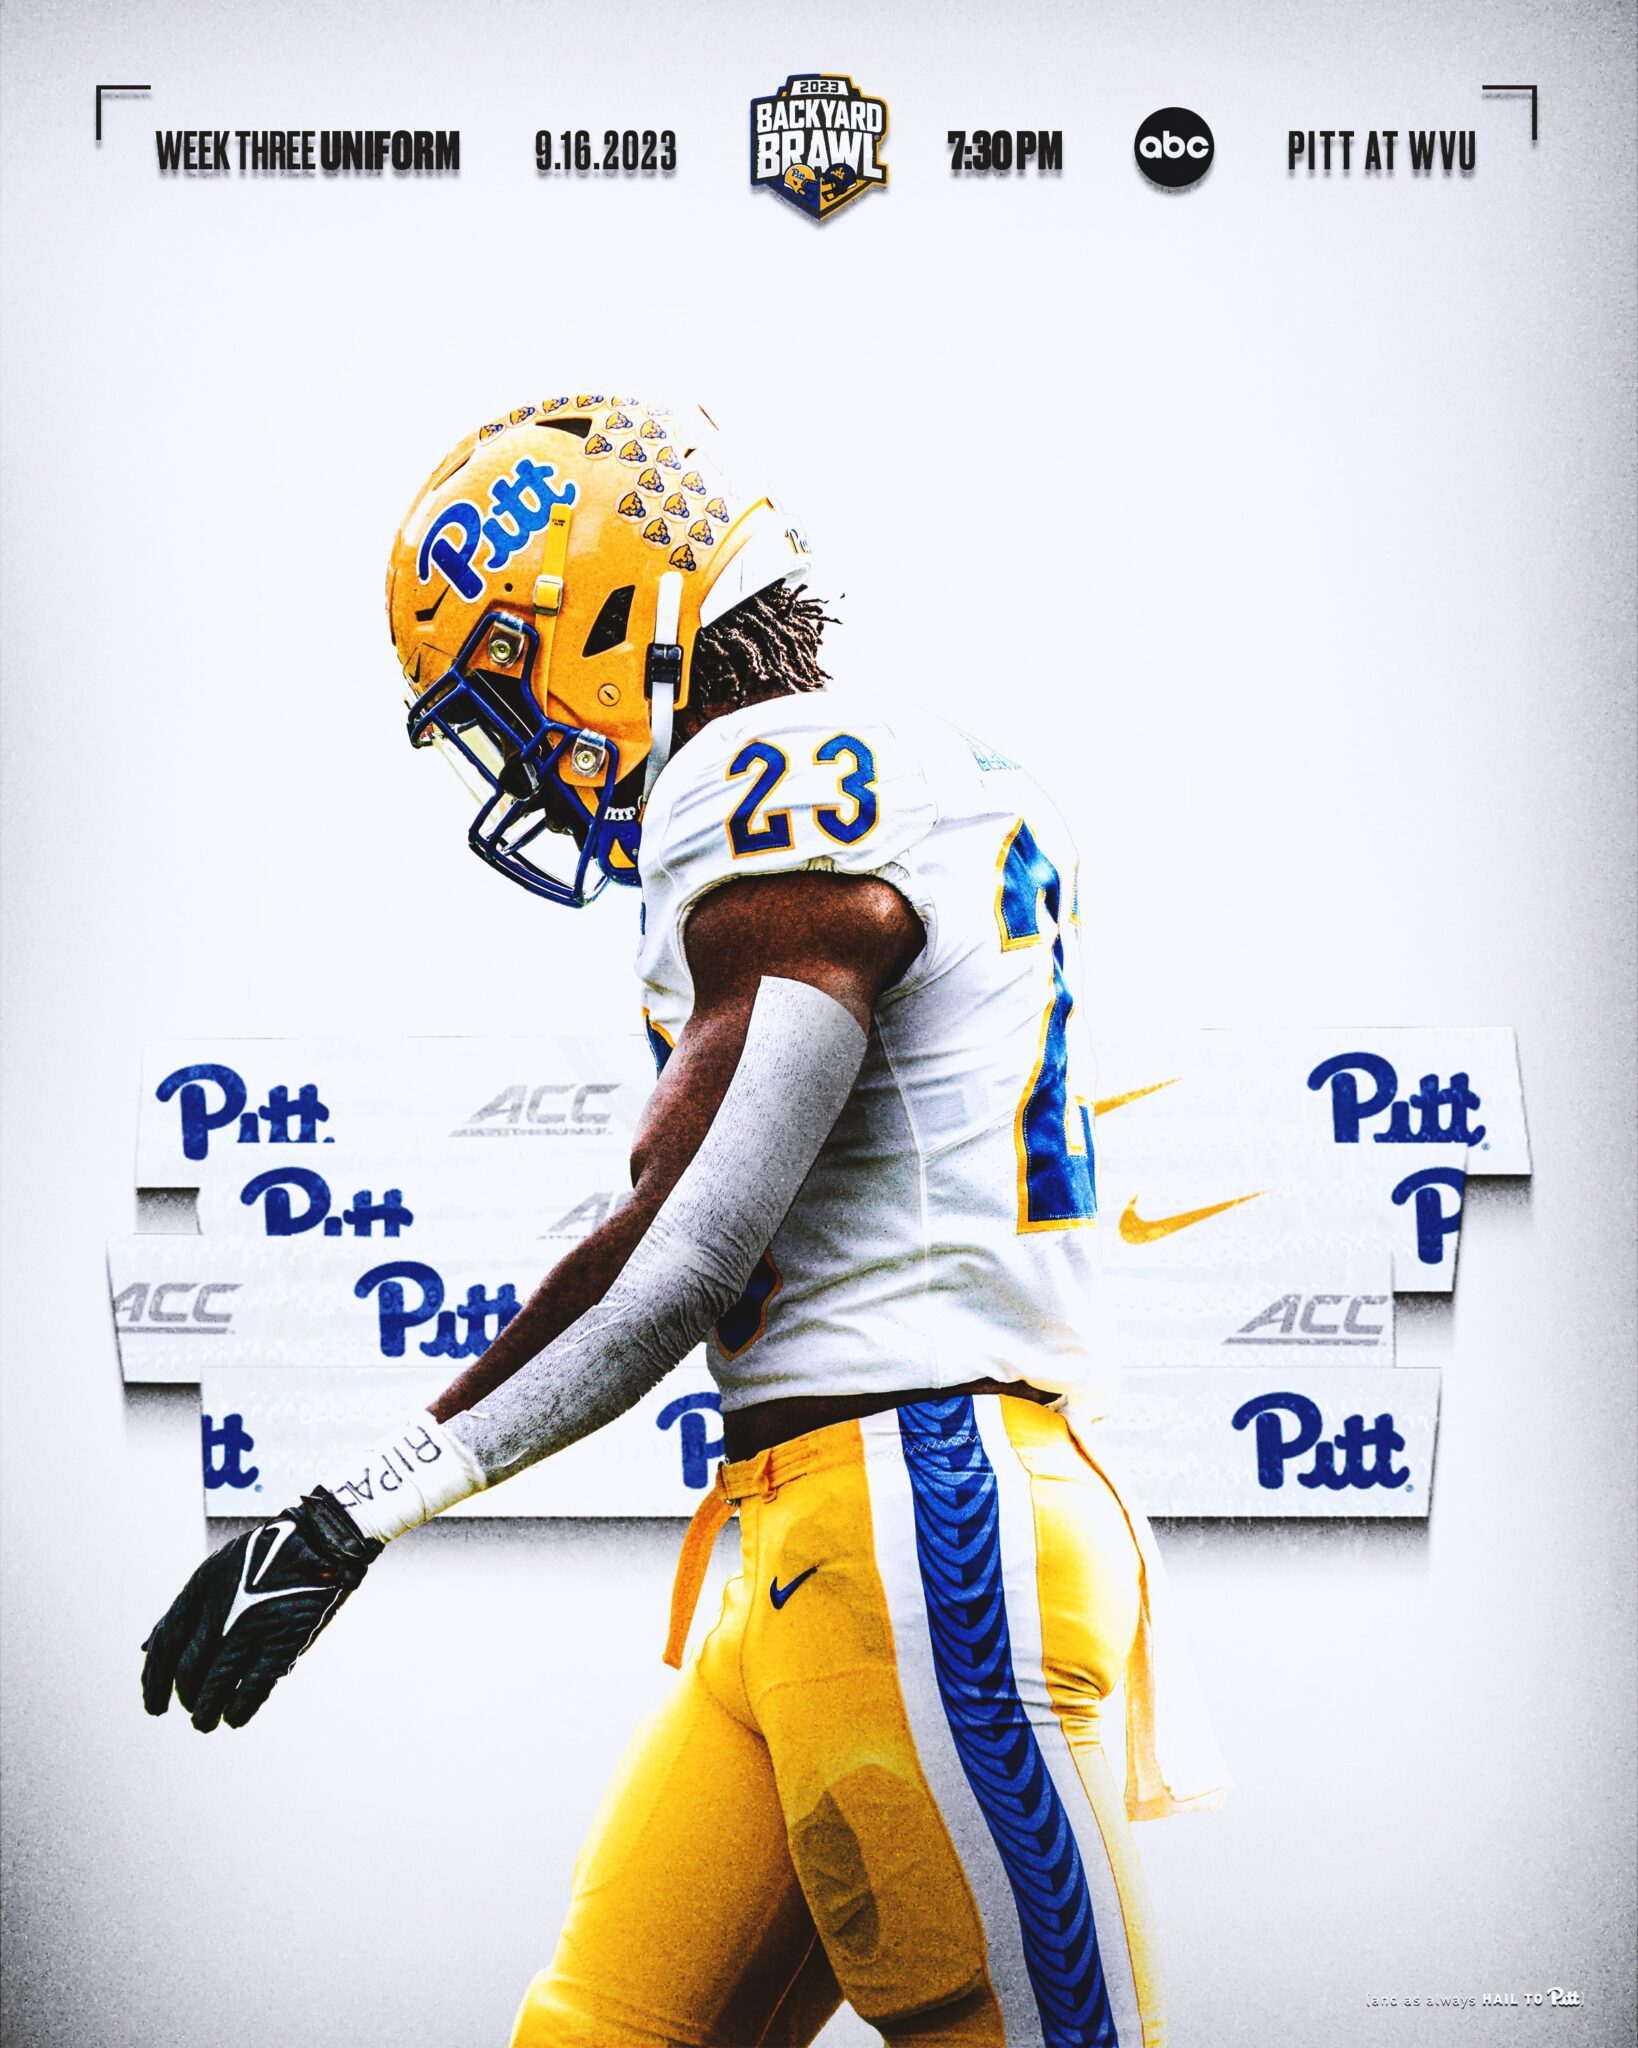 Pitt football uniforms for 2023 Backyard Brawl.